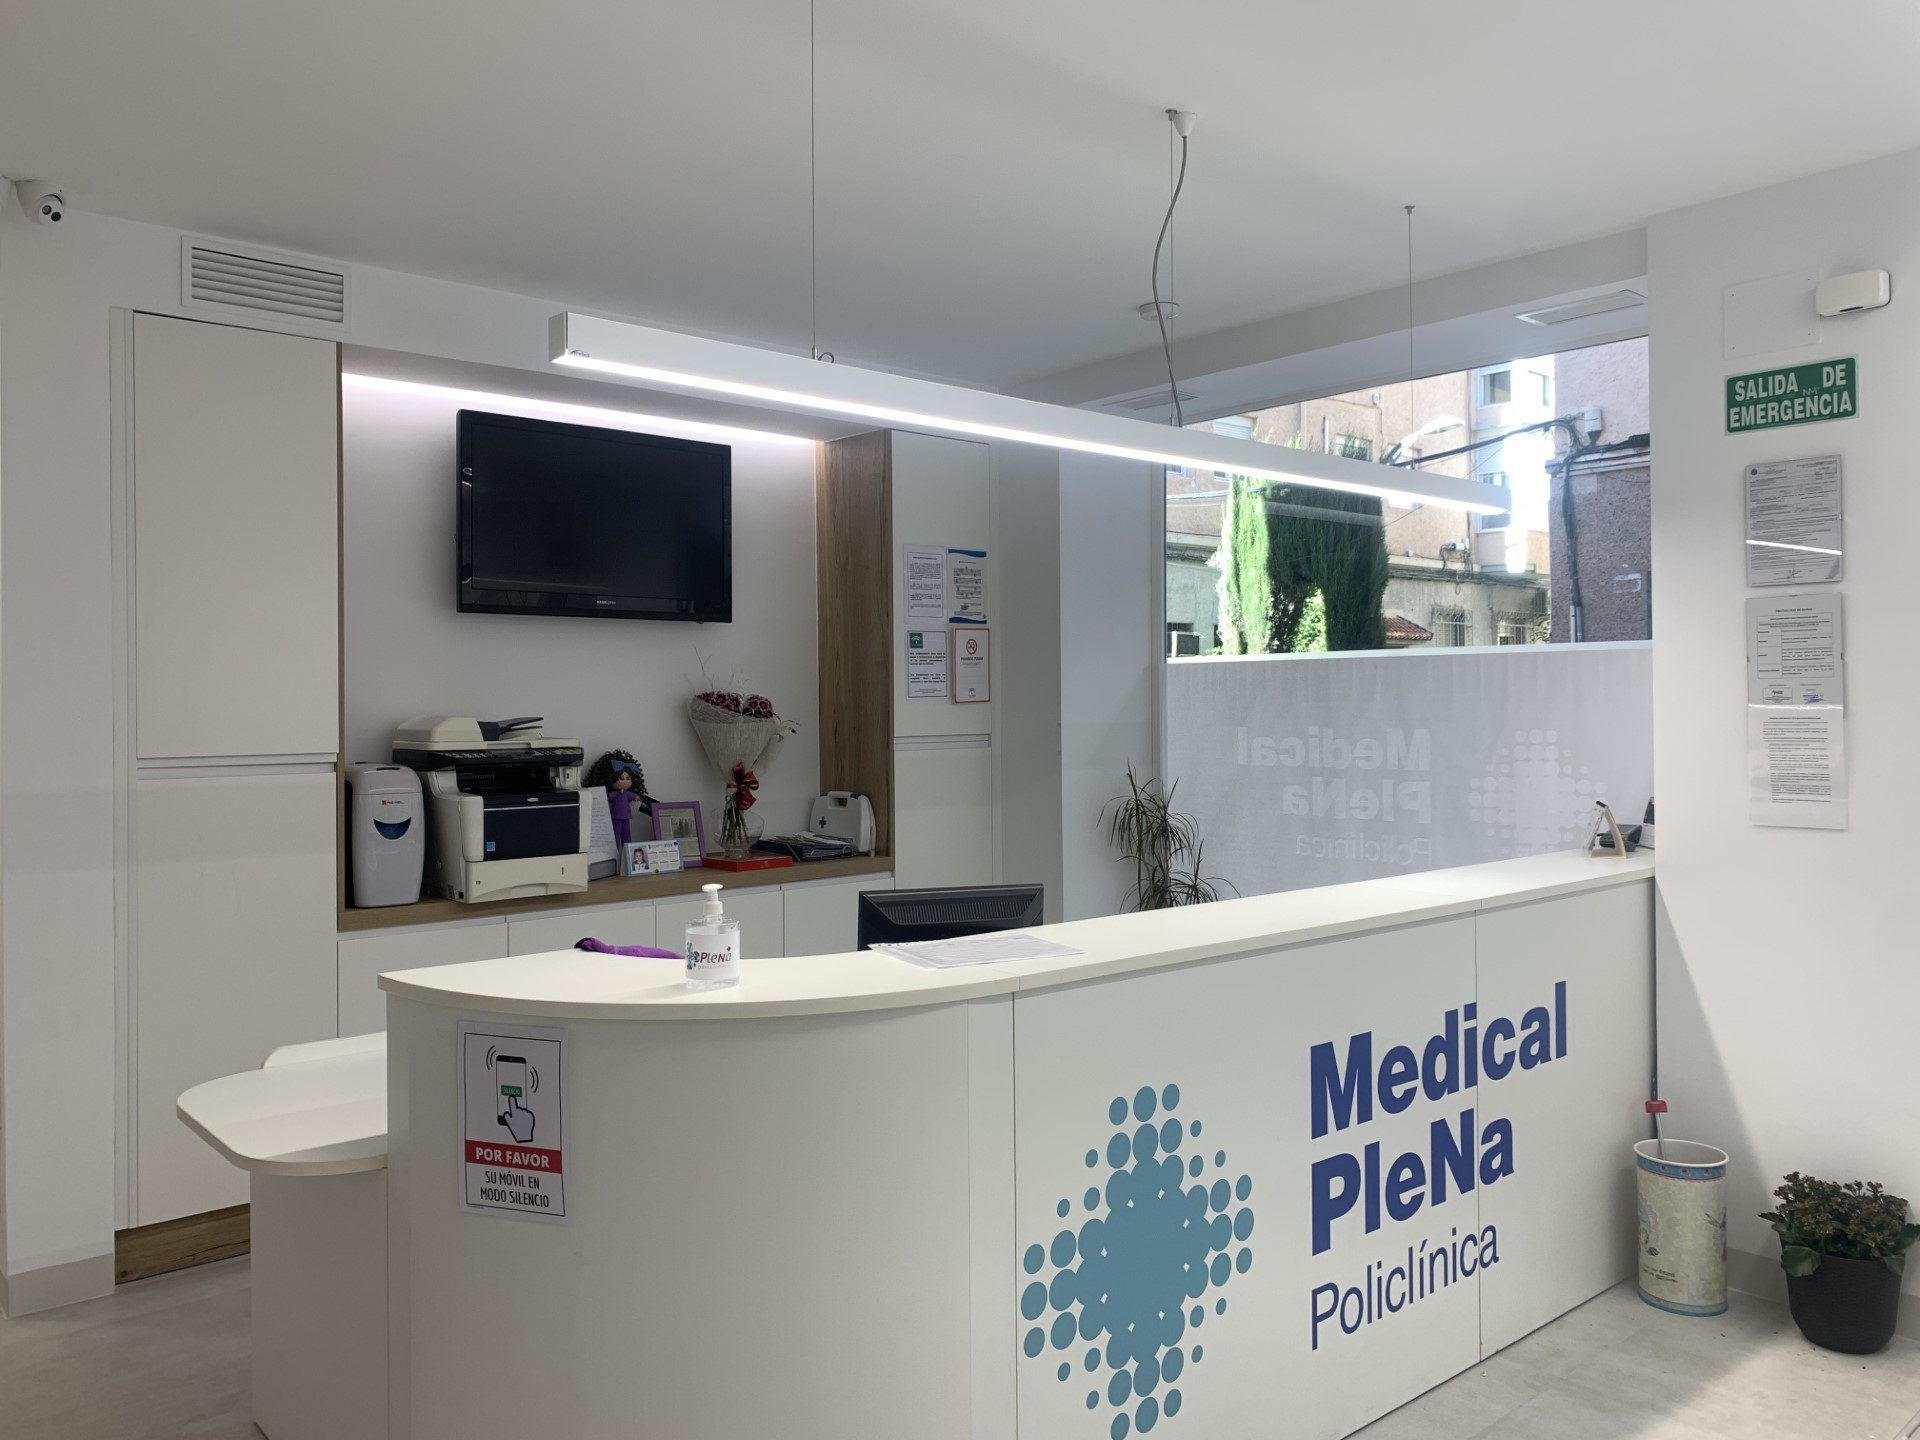 Local comercial destinado a Policlínica médica en calle Mirlo (Granada)